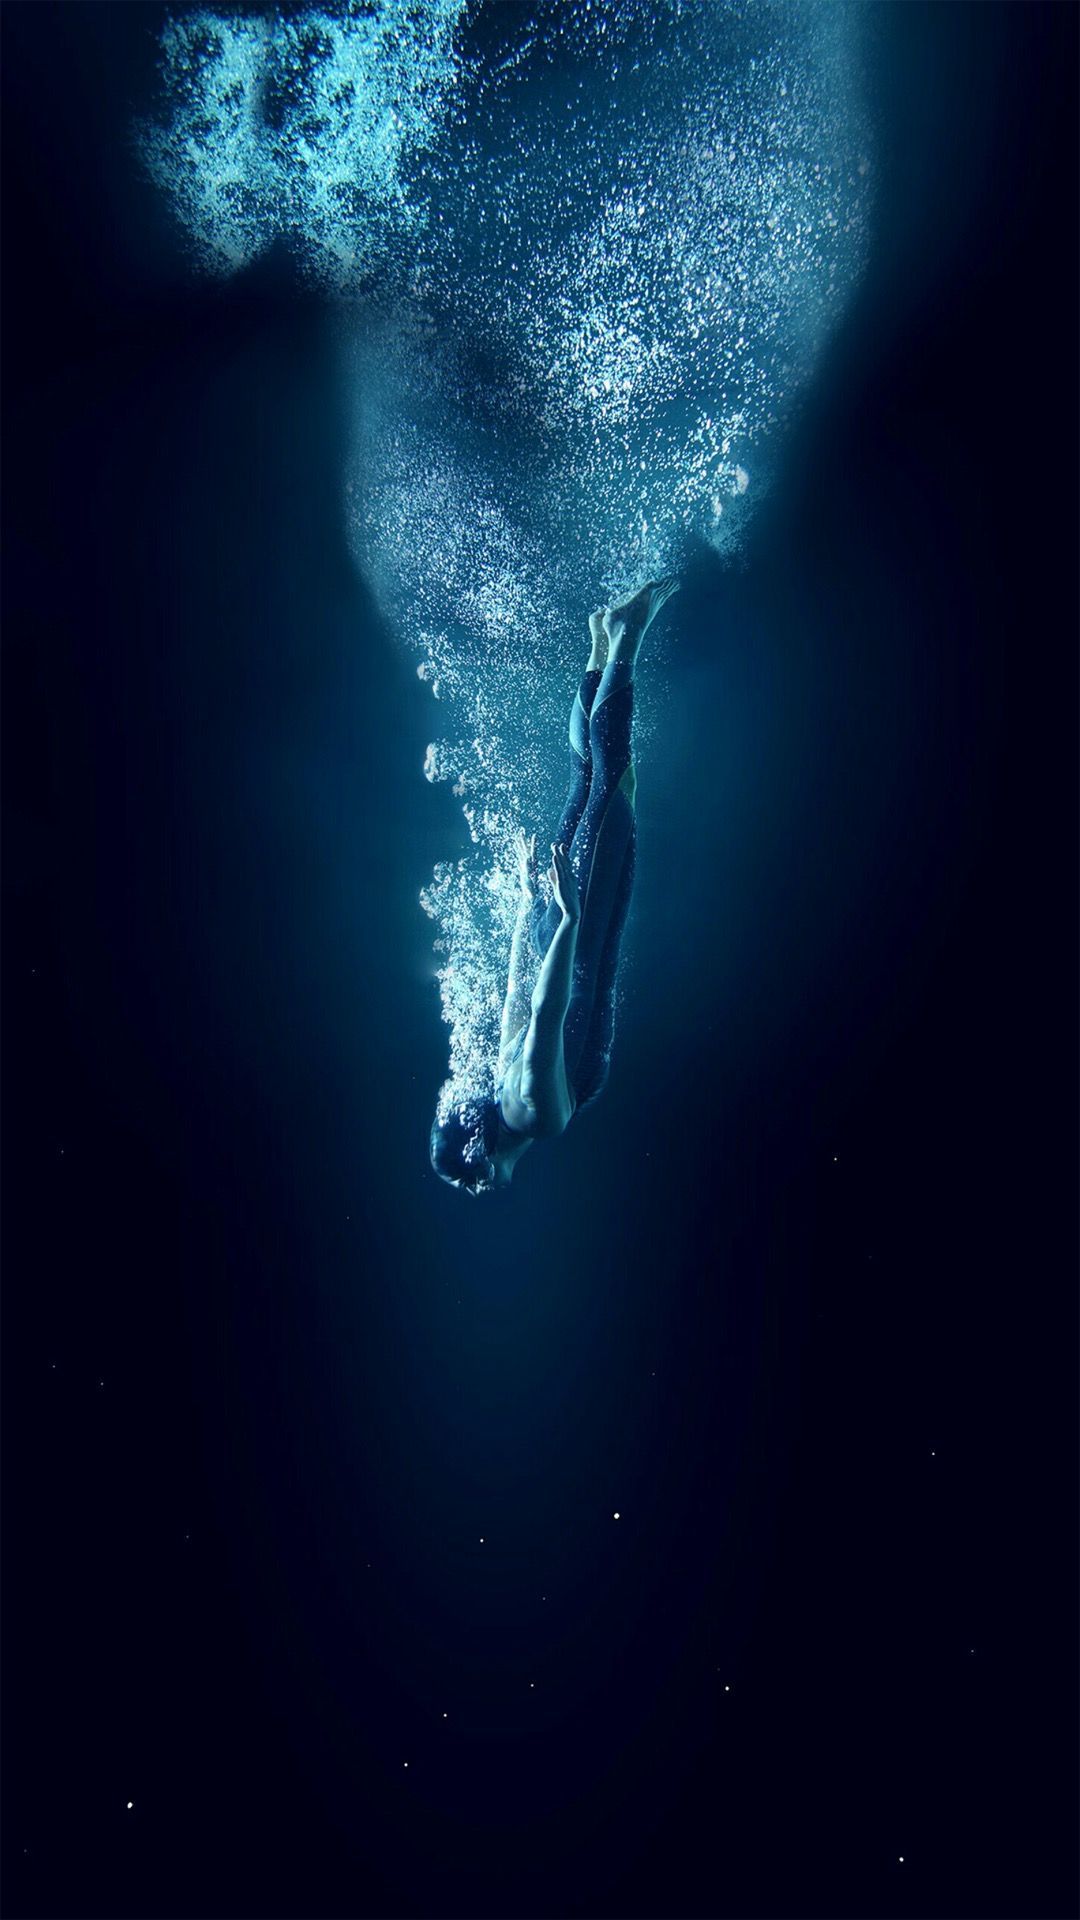 IPhone wallpaper of a diver in the ocean. - Underwater